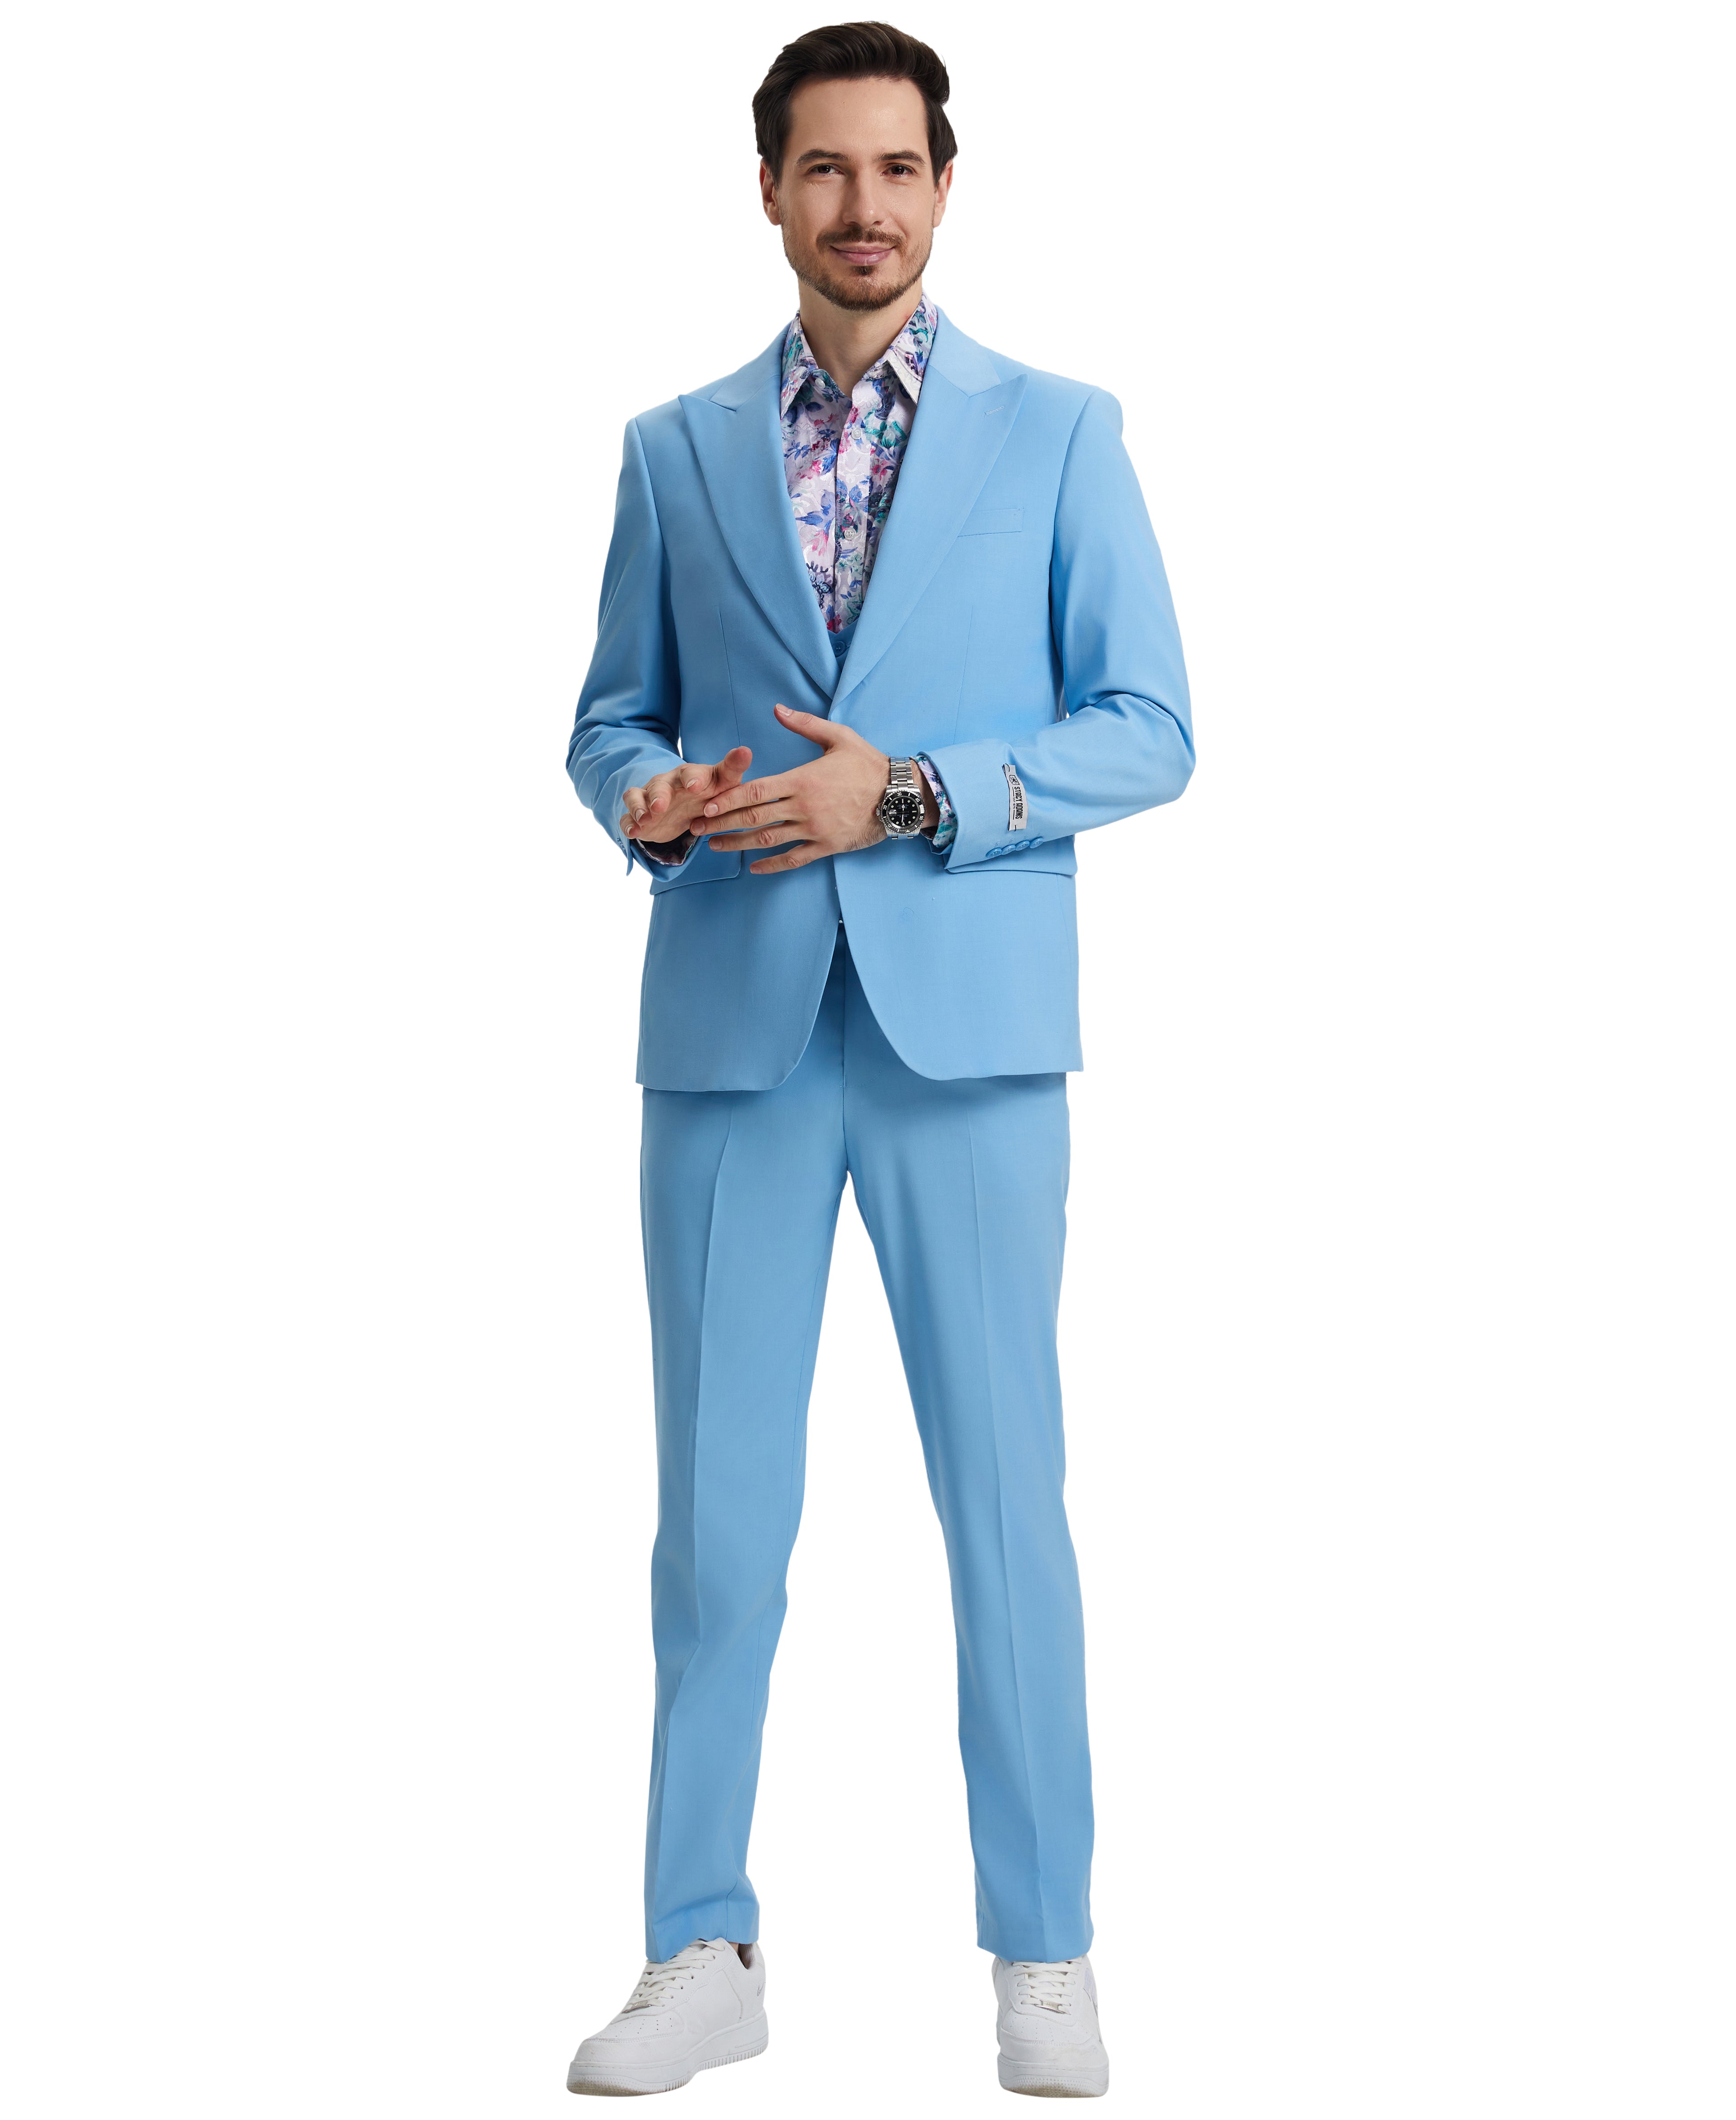 Stacy Adams Hybrid Fit U-Shaped Vested Suit, Sky Blue